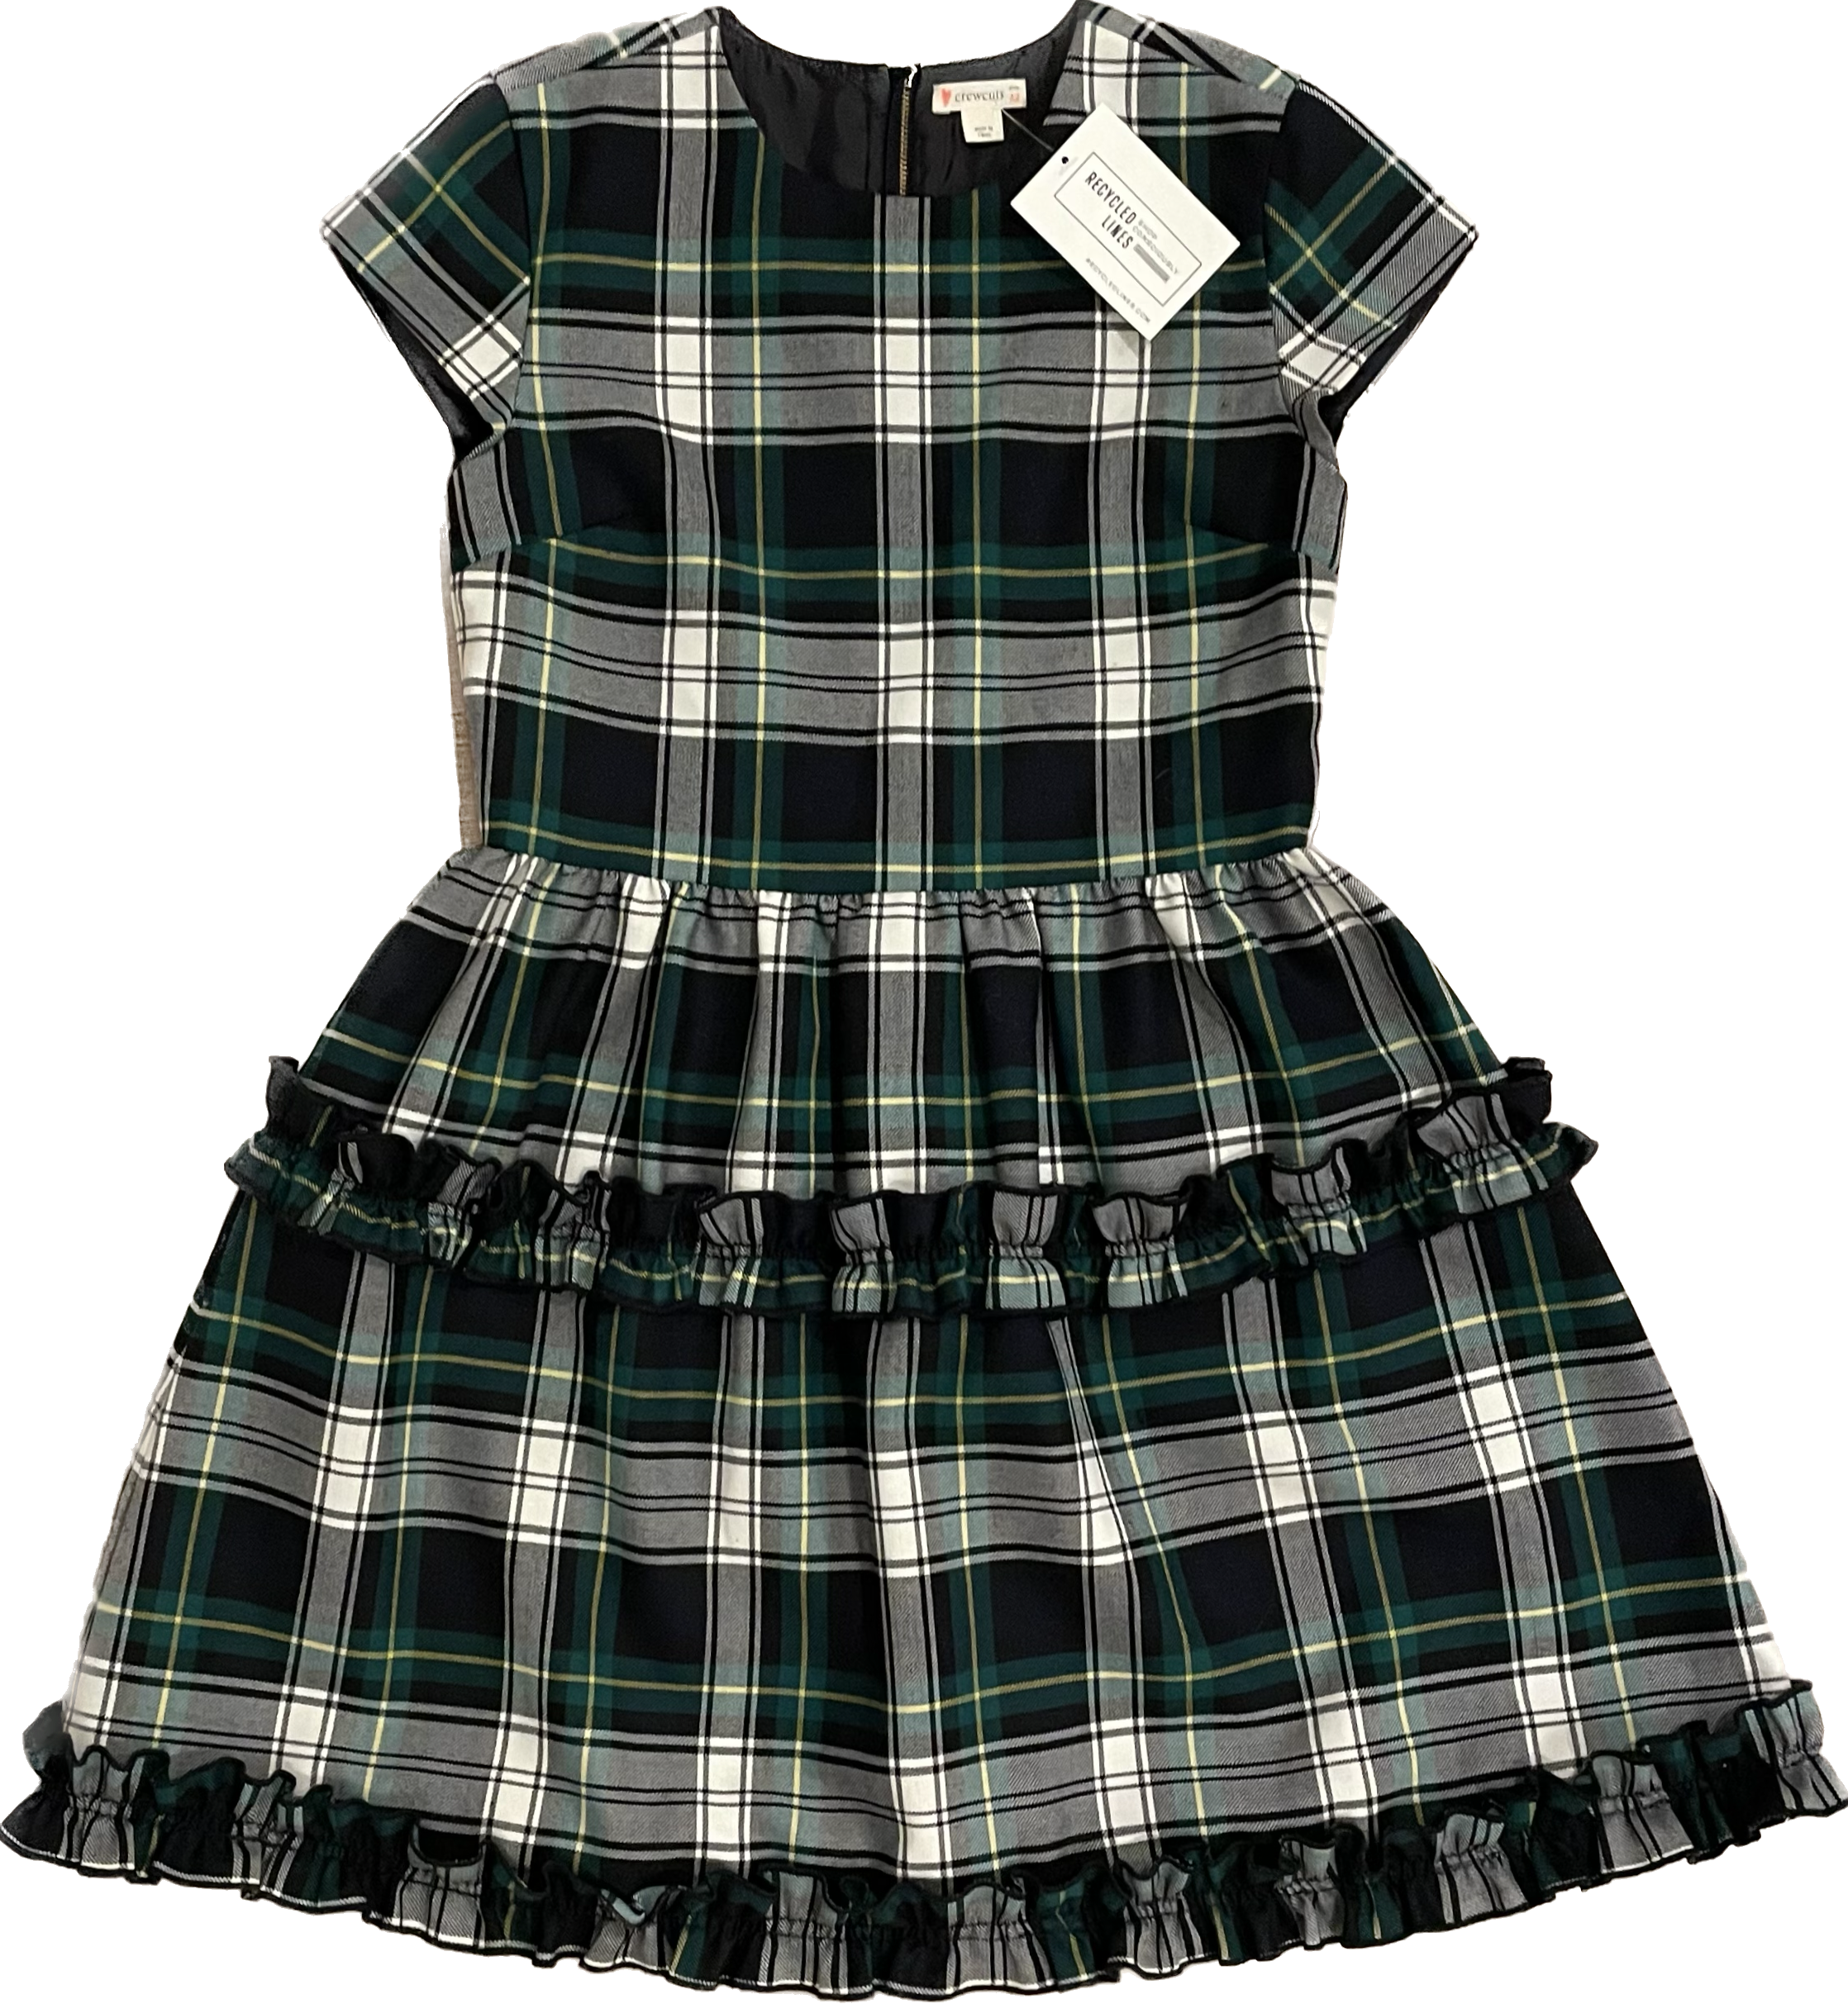 Crewcuts Holiday Dress, Navy/Green Plaid Girls Size 12